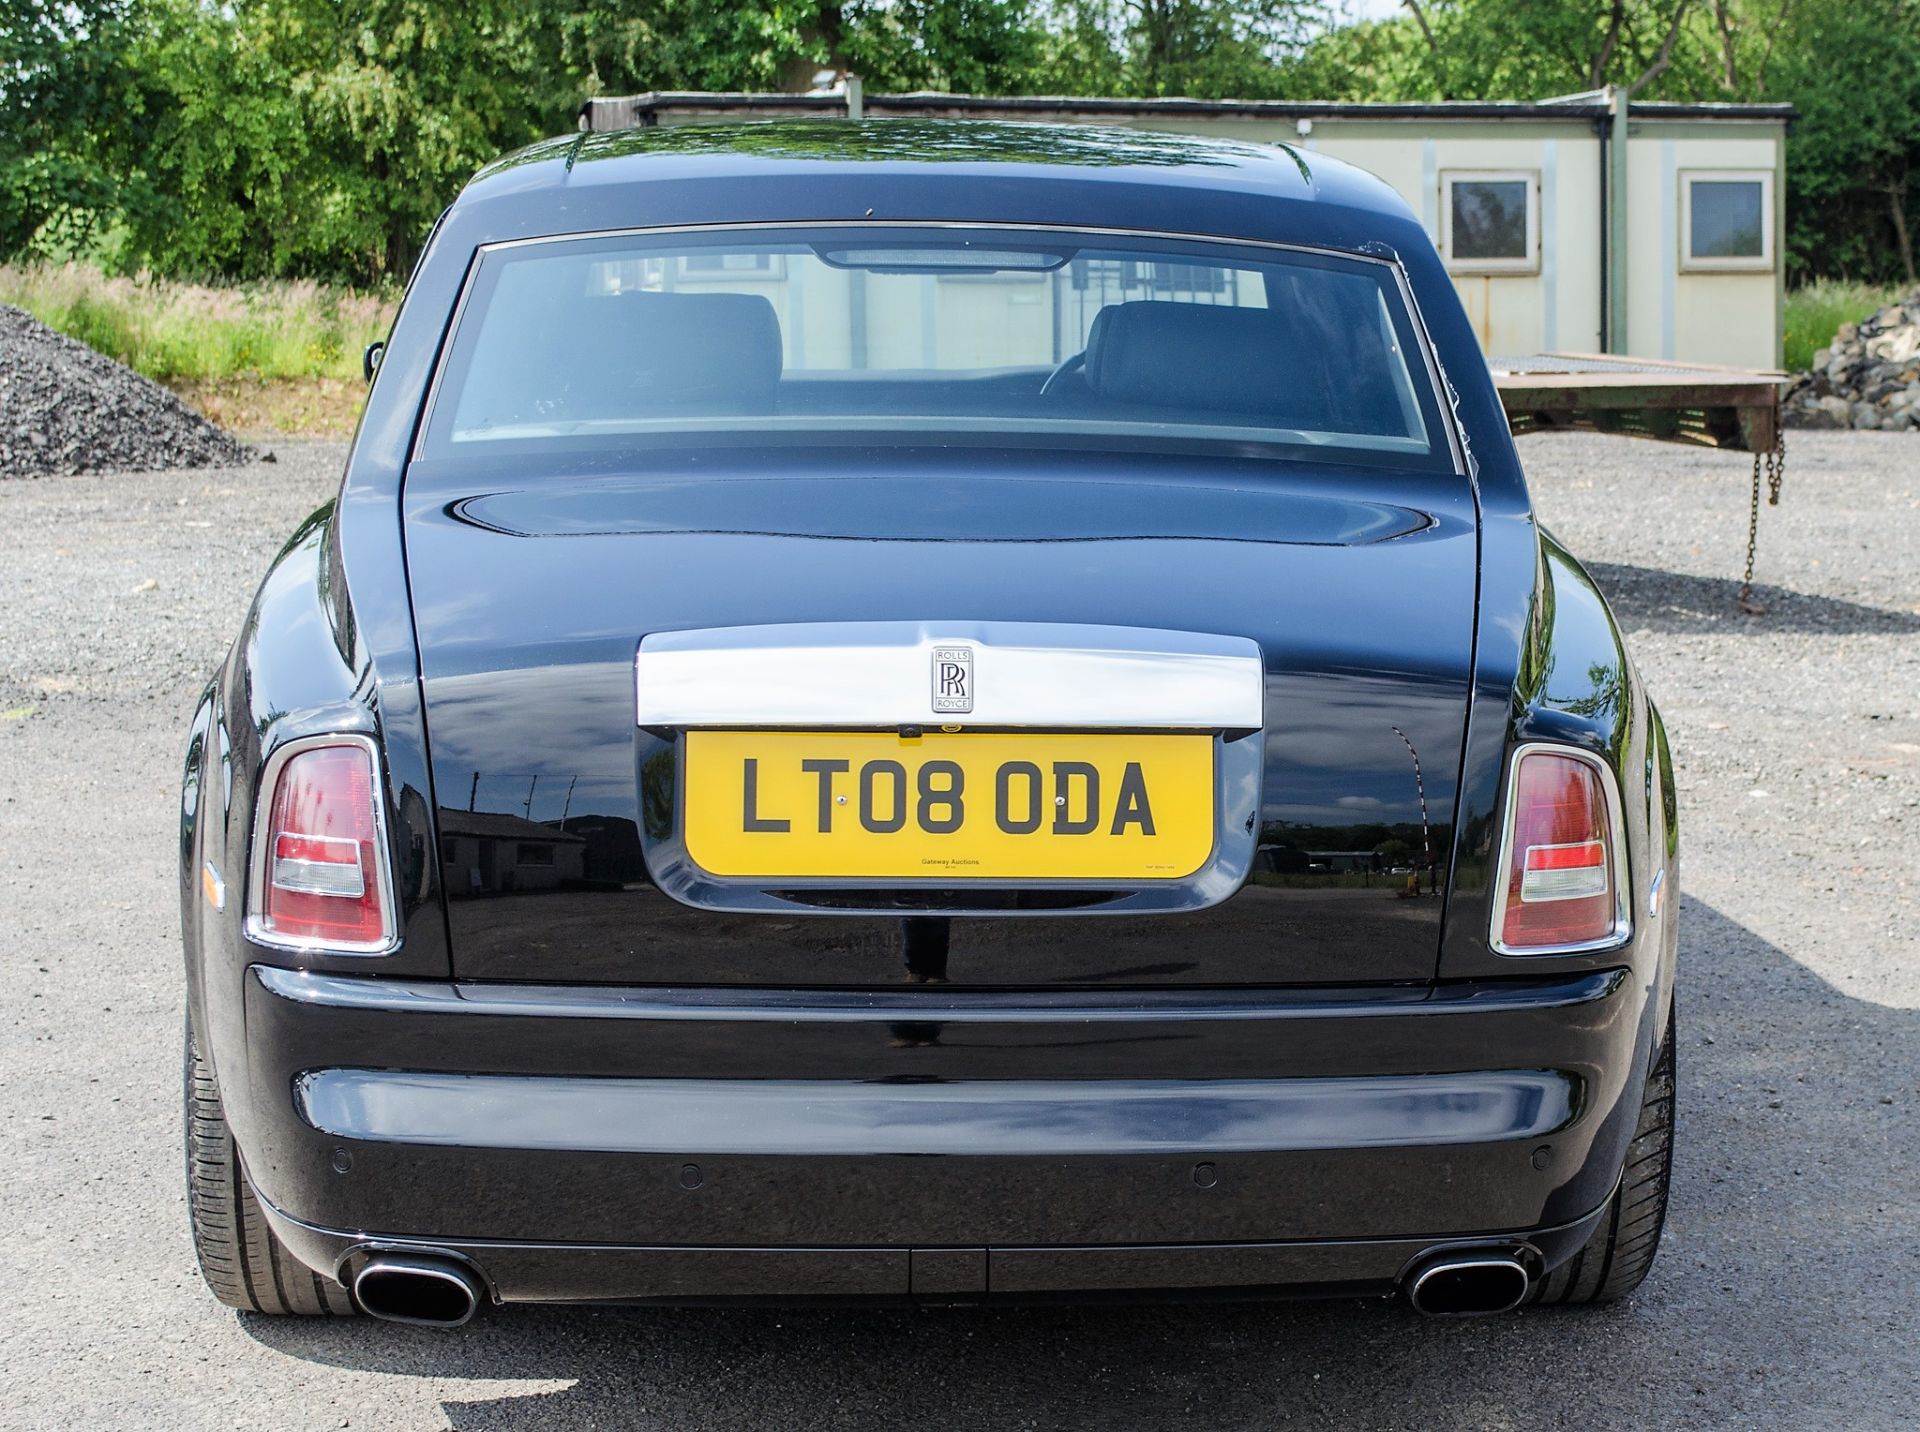 Rolls Royce Phantom VII 6.75 litre petrol 4 door saloon car  Reg No: LT 08 ODA Date of Registration: - Image 10 of 44